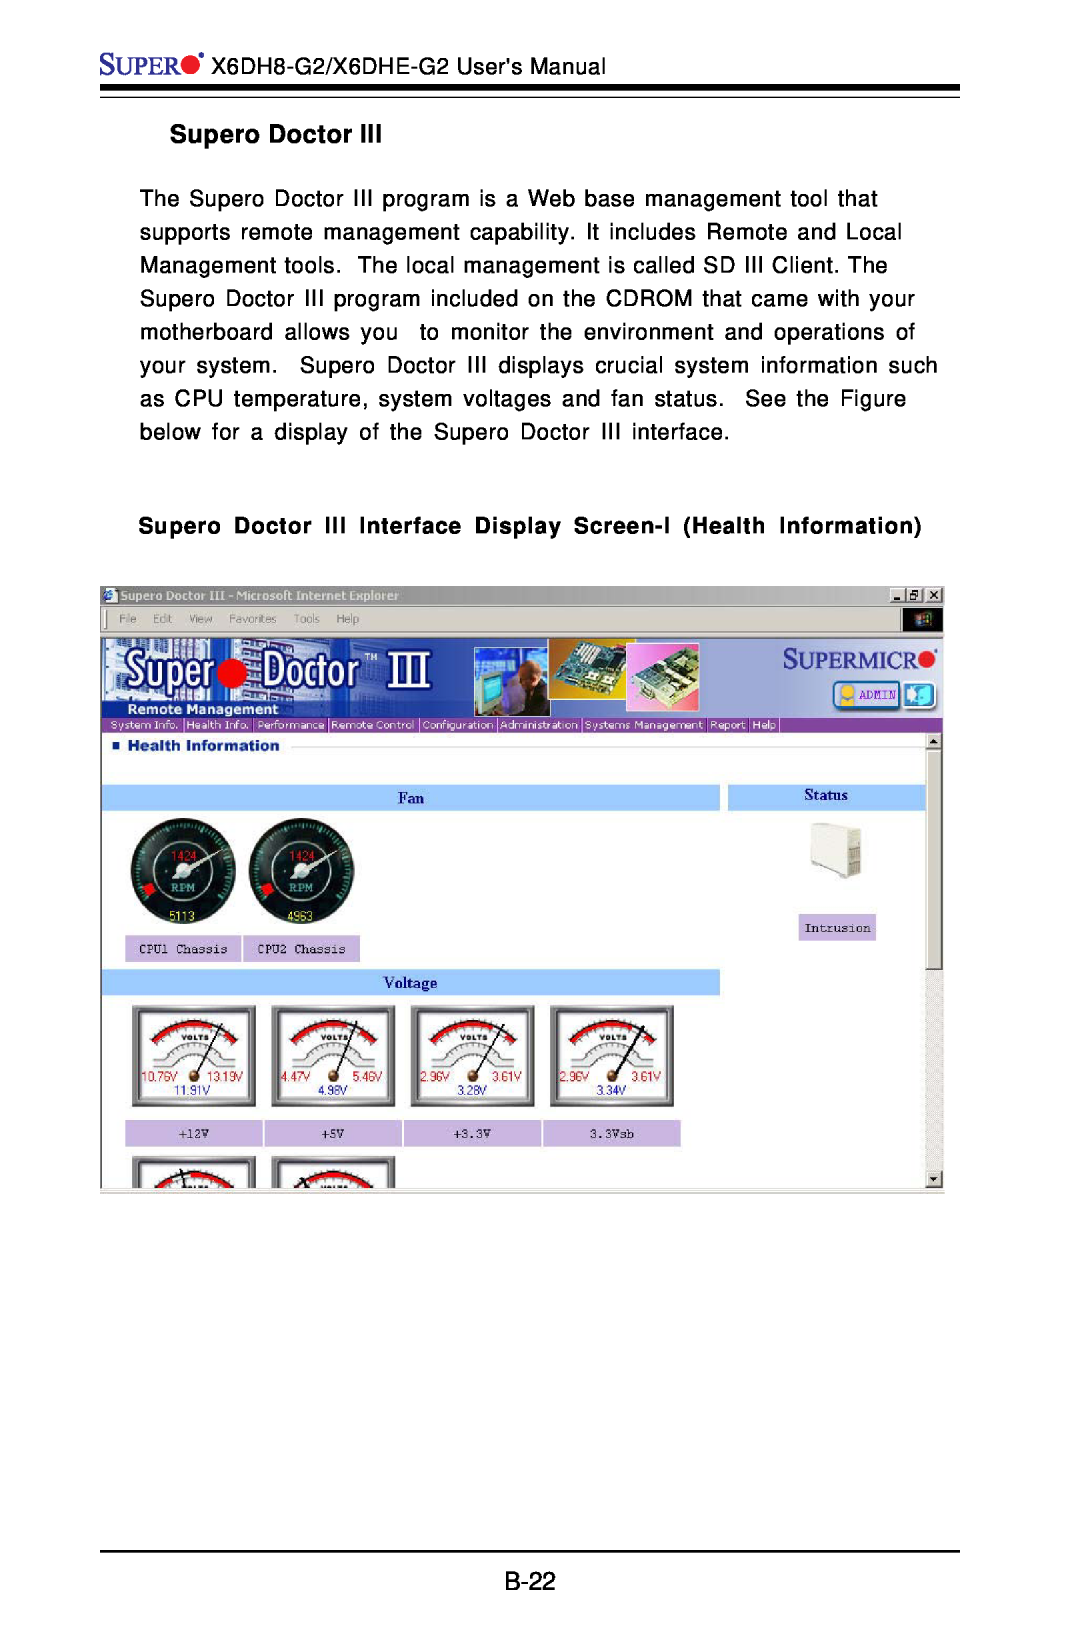 SUPER MICRO Computer X6DH8-G2, X6DHE-G2 manual B-22, Supero Doctor III Interface Display Screen-I Health Information 